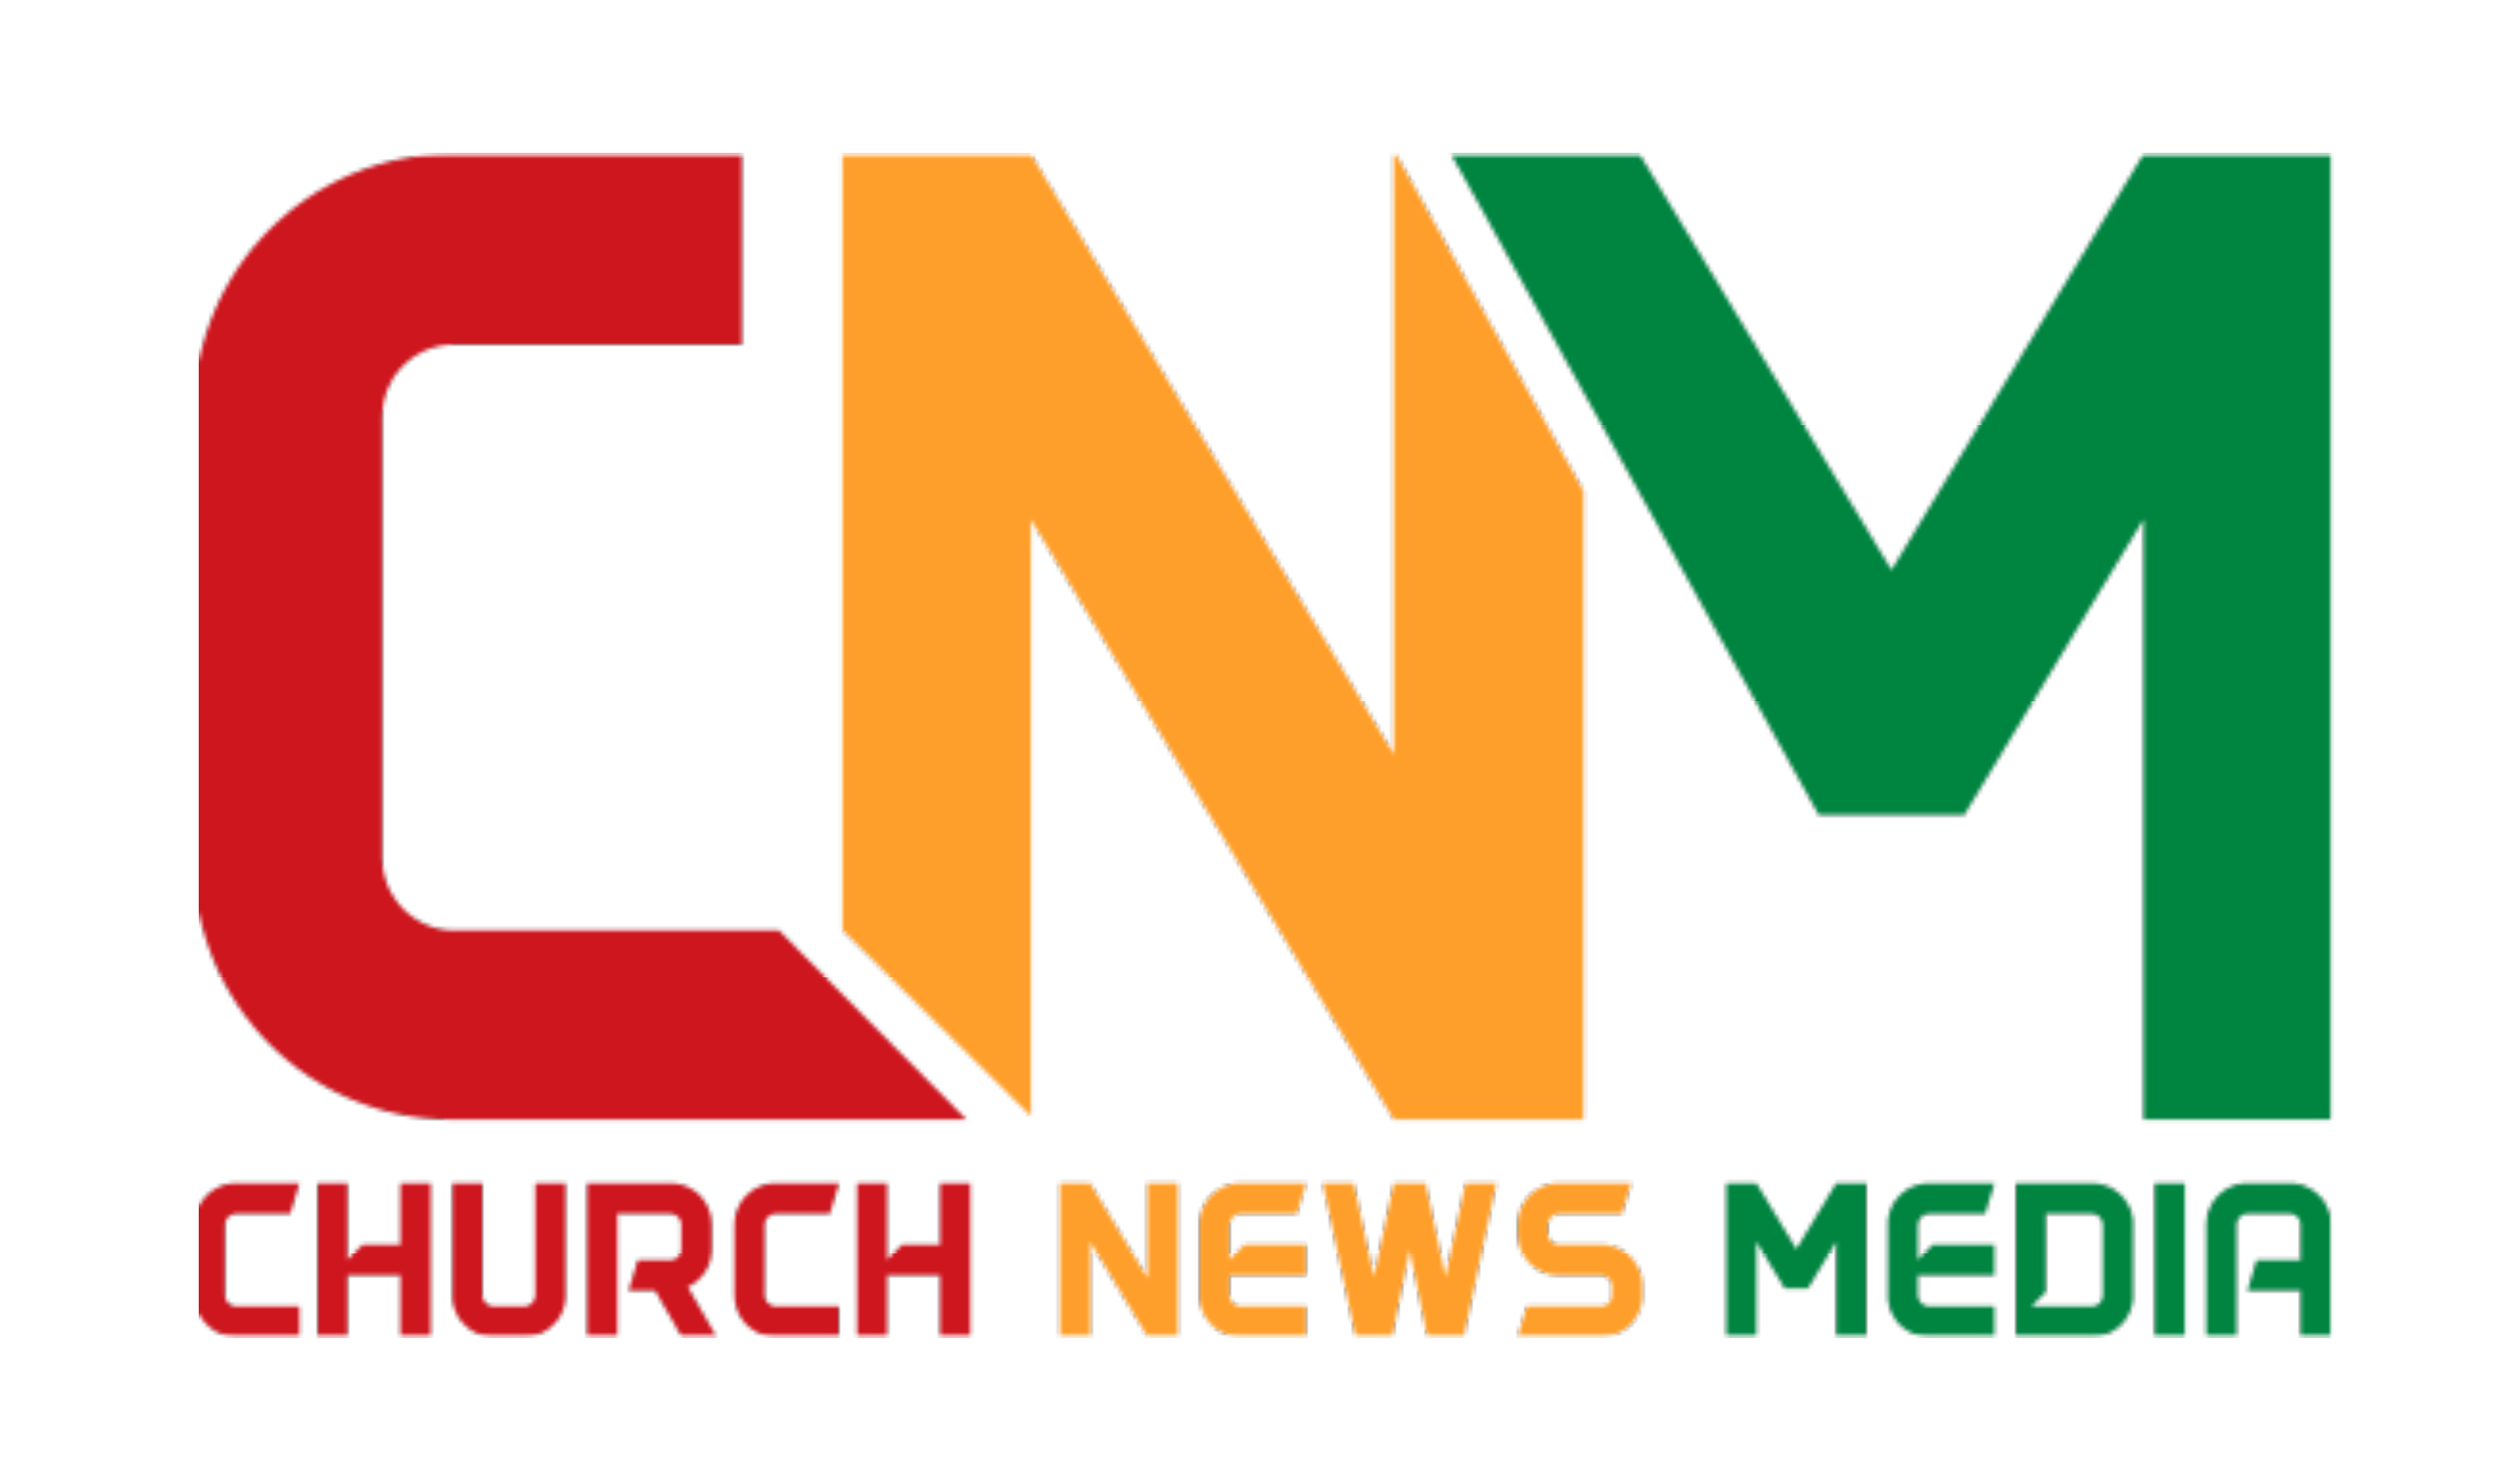 Church News Media